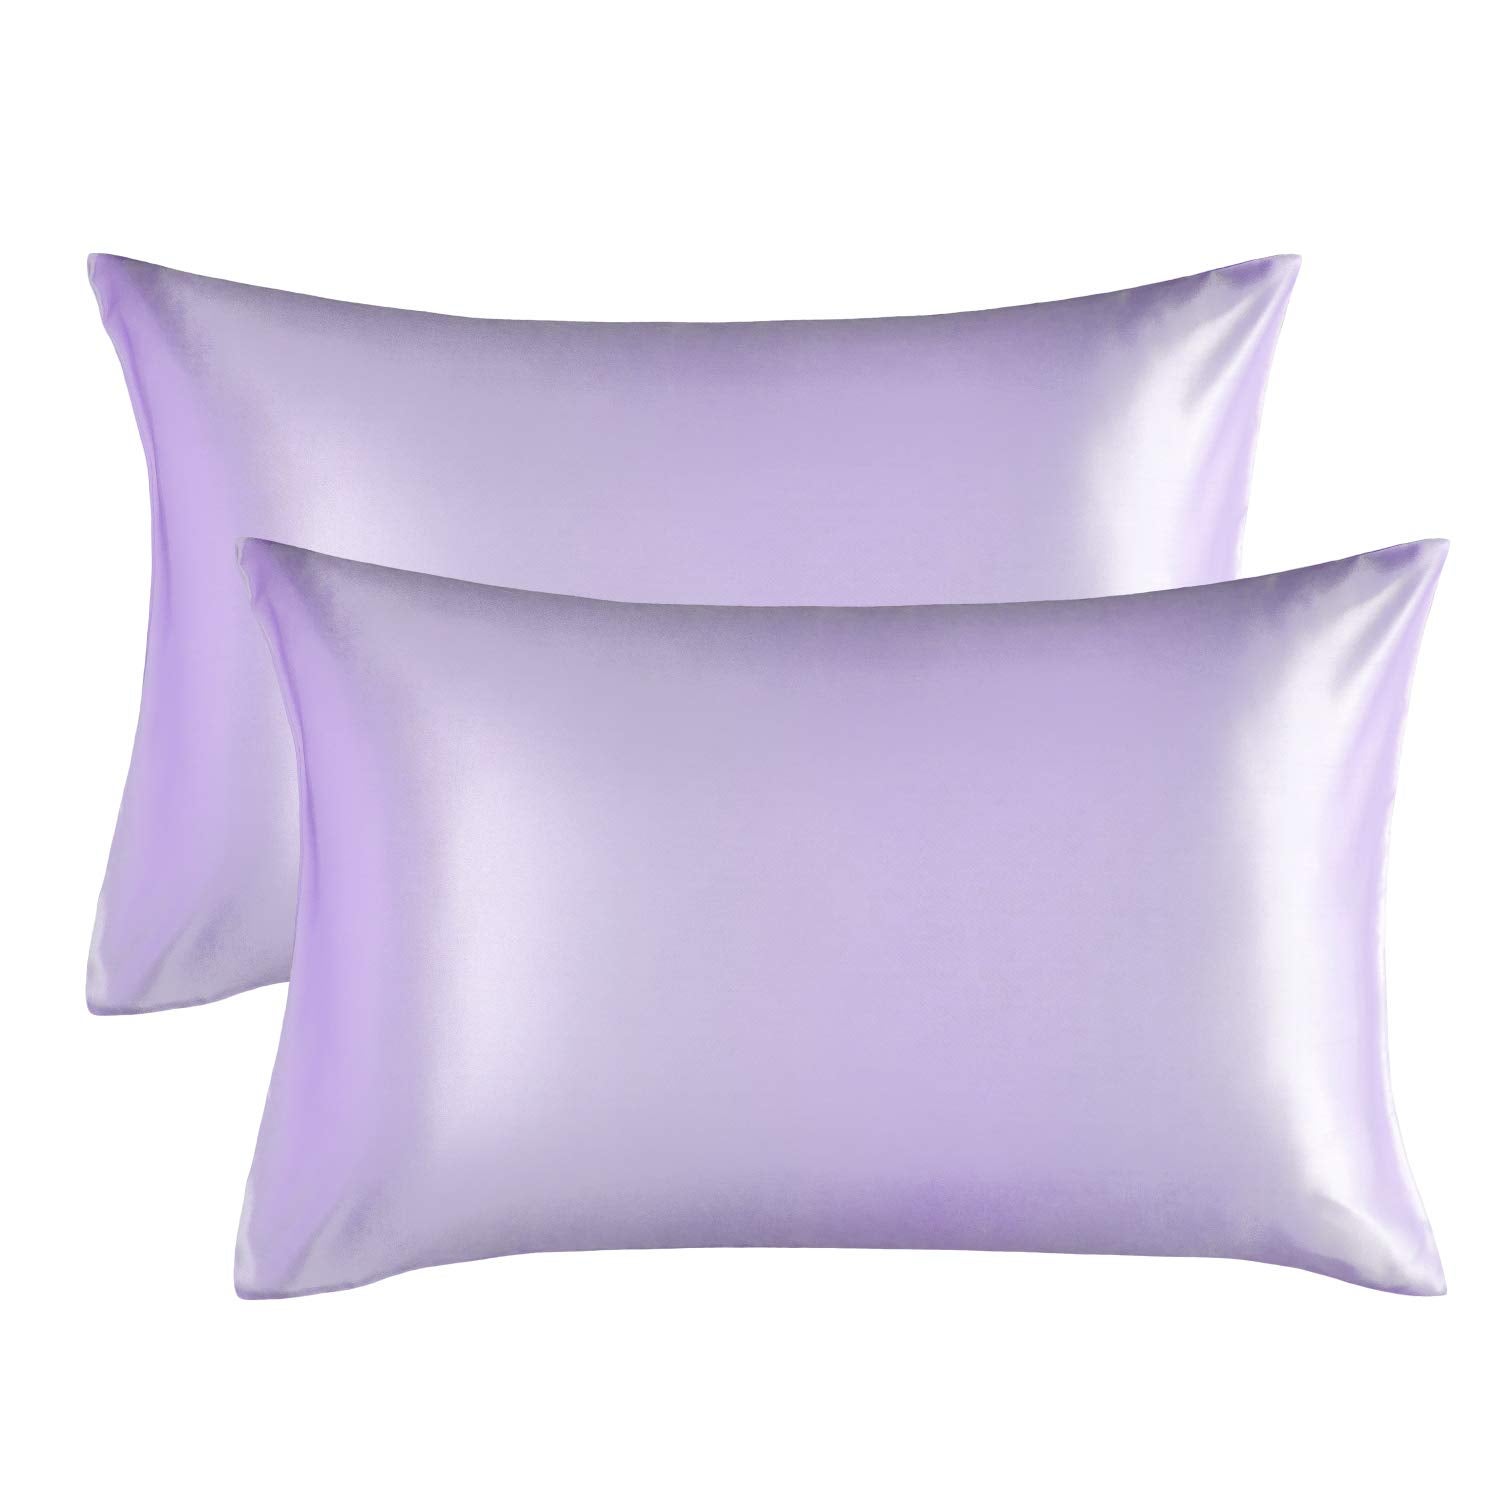 Details about   1800 Series Pillow Case Cover Set Satin Silk Pillowcase Set of 2 Pillowcases USA